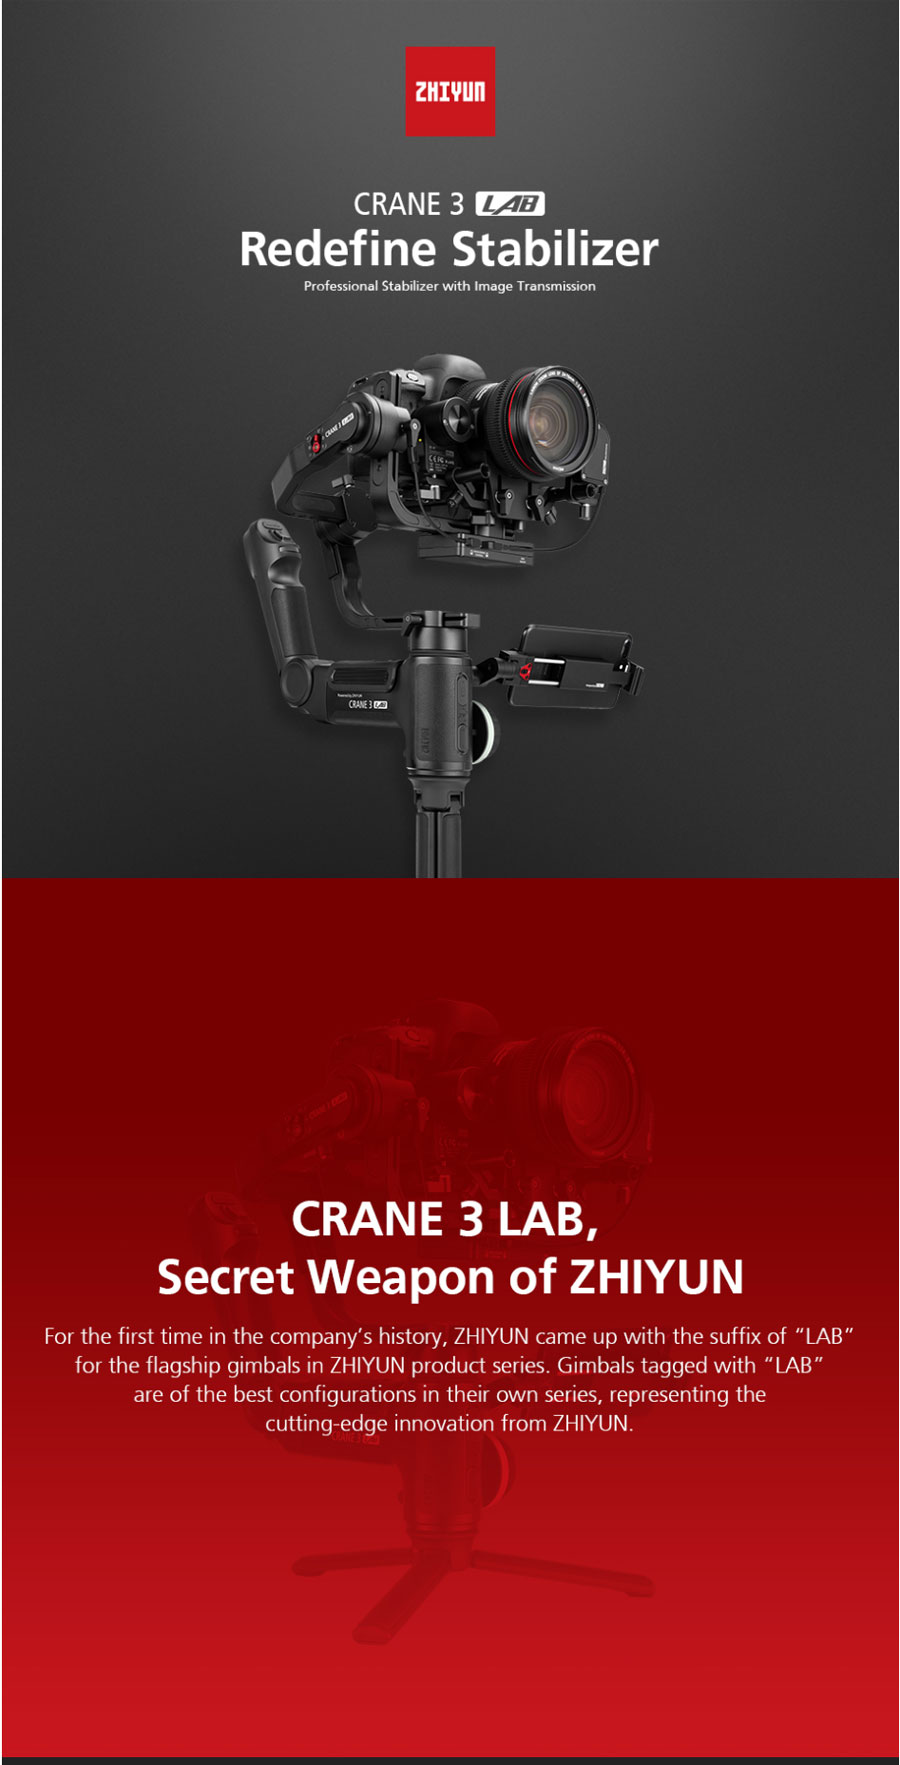 ZHIYUN-Crane-3-LAB-Master-3-Axis-Handheld-Wireless-1080P-FHD-Image-Transmission-Gimbal-Stabilizer-fo-1594646